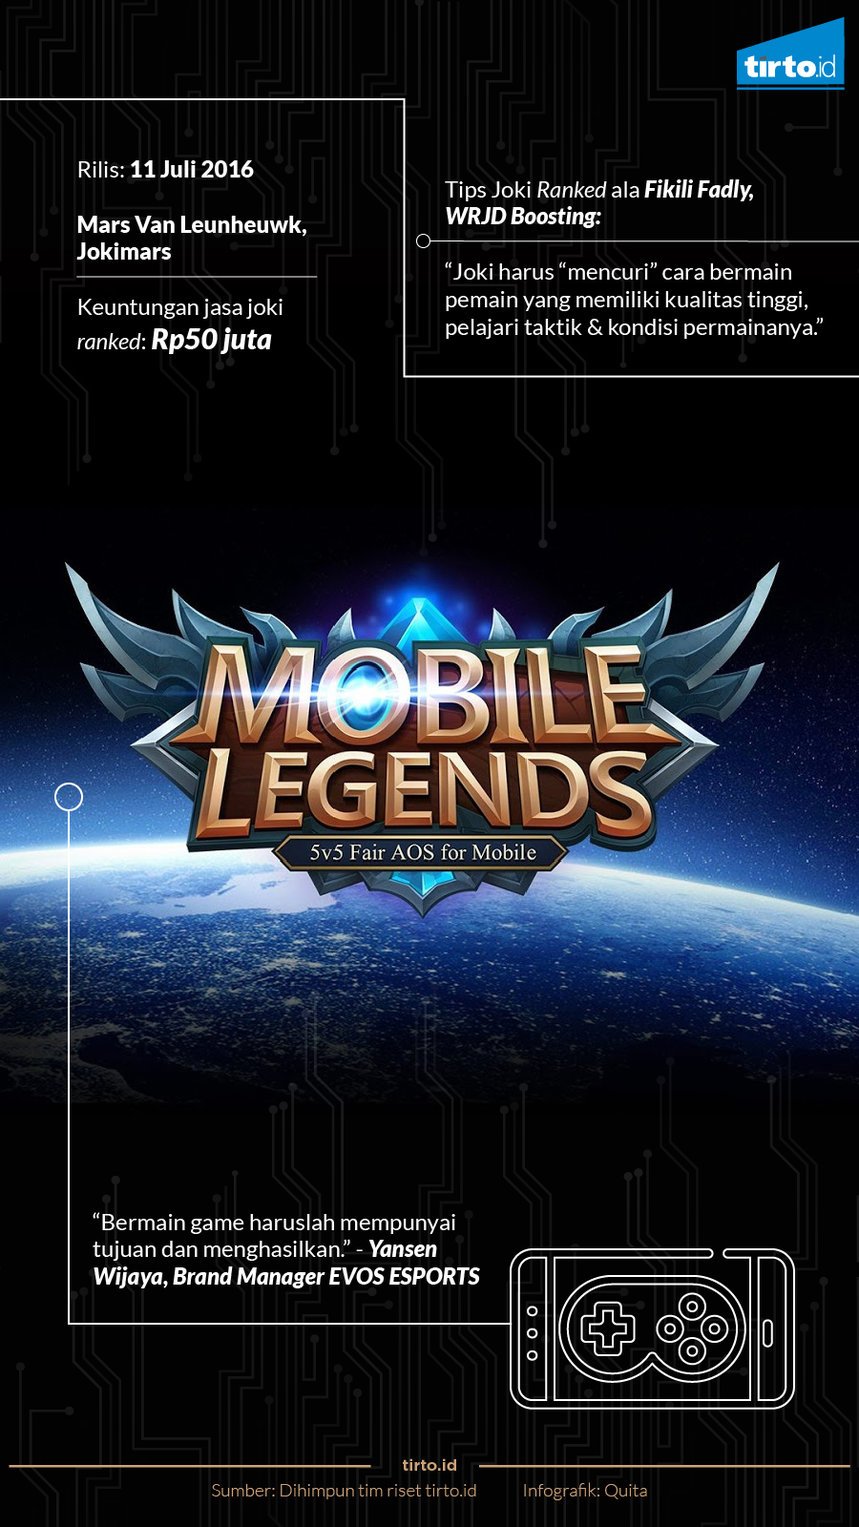 Mmc mobile legend